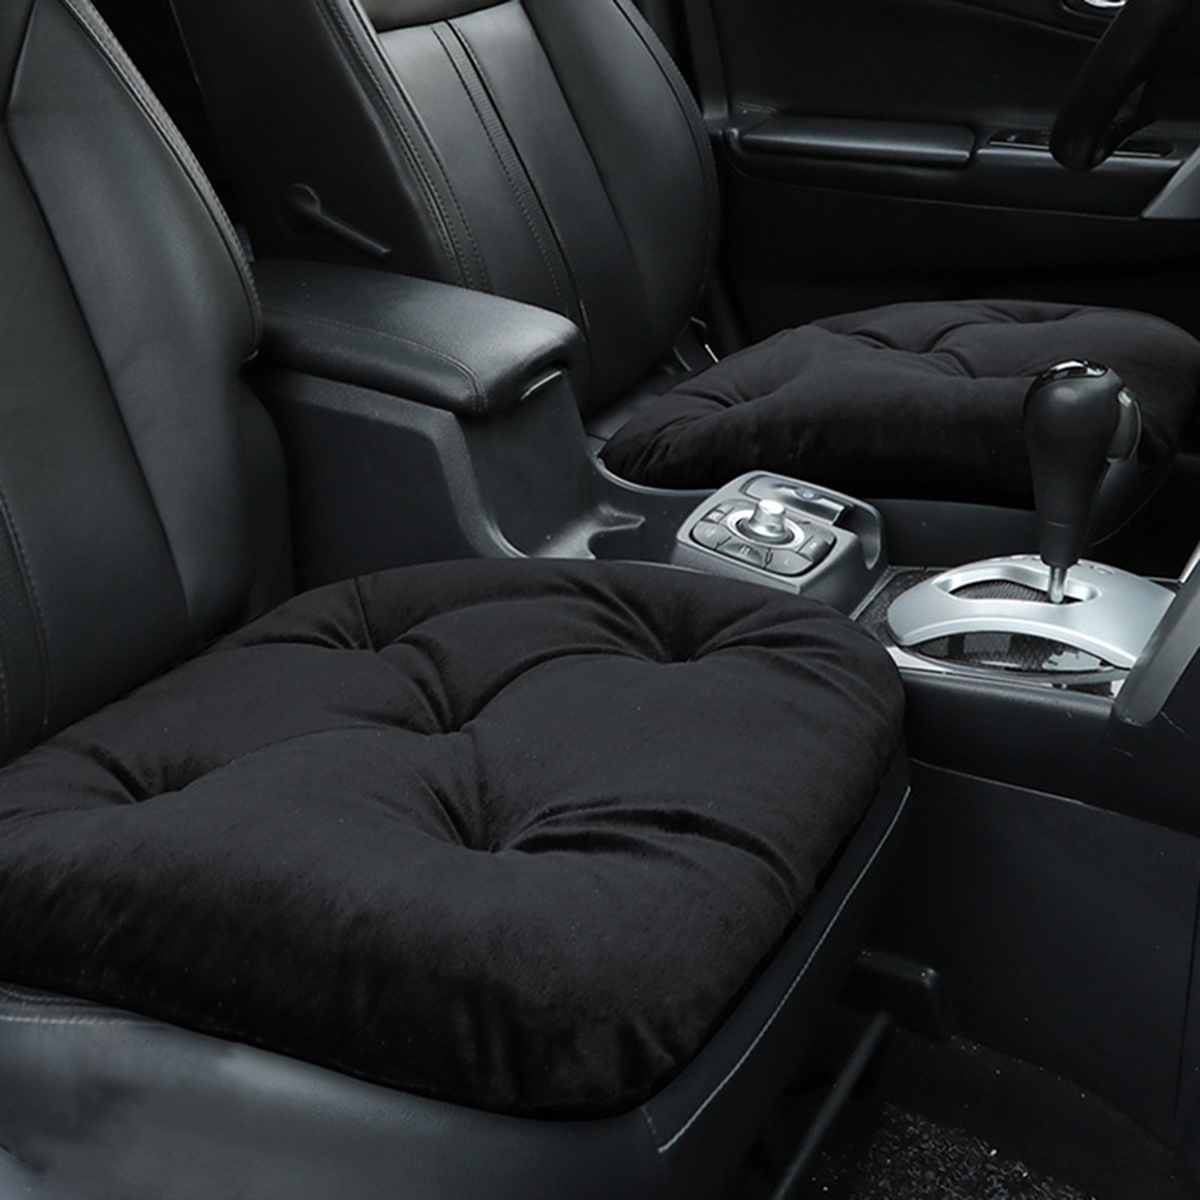 Front Car Plush Backrest Seat Cushion Soft Comfortable Cover Protect Winter Pad - Auto GoShop